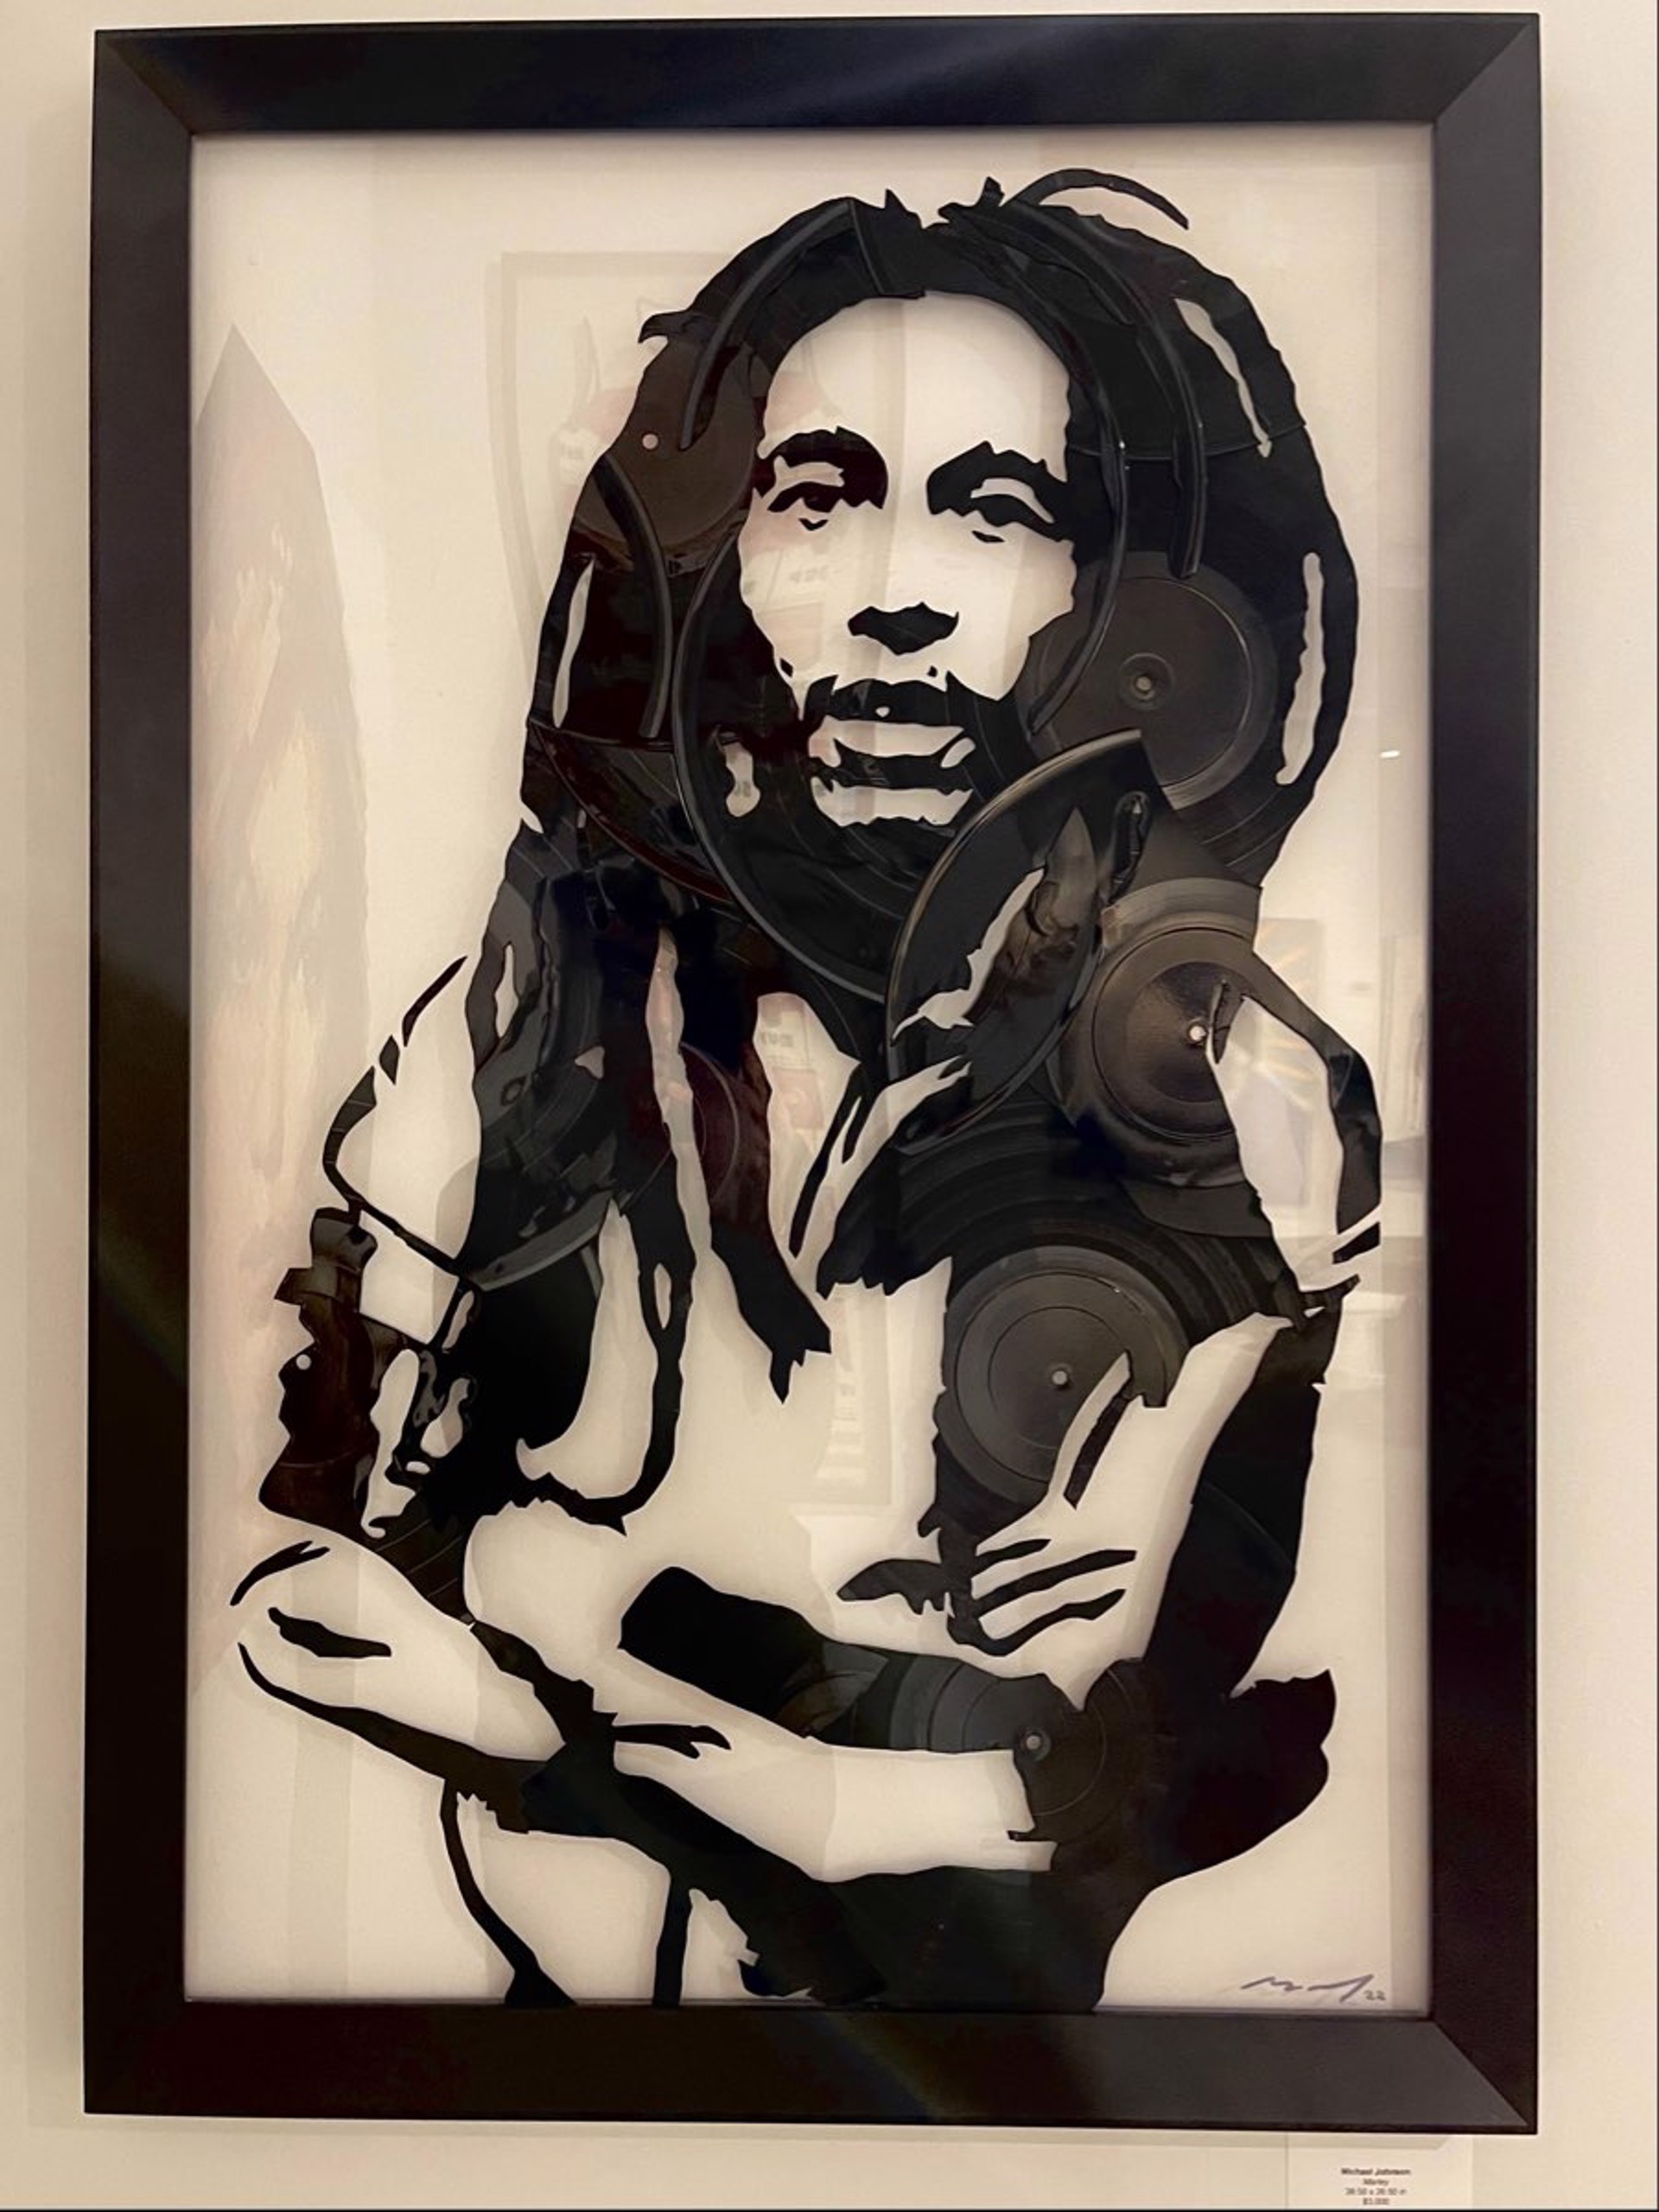 Marley by Michael Johnson